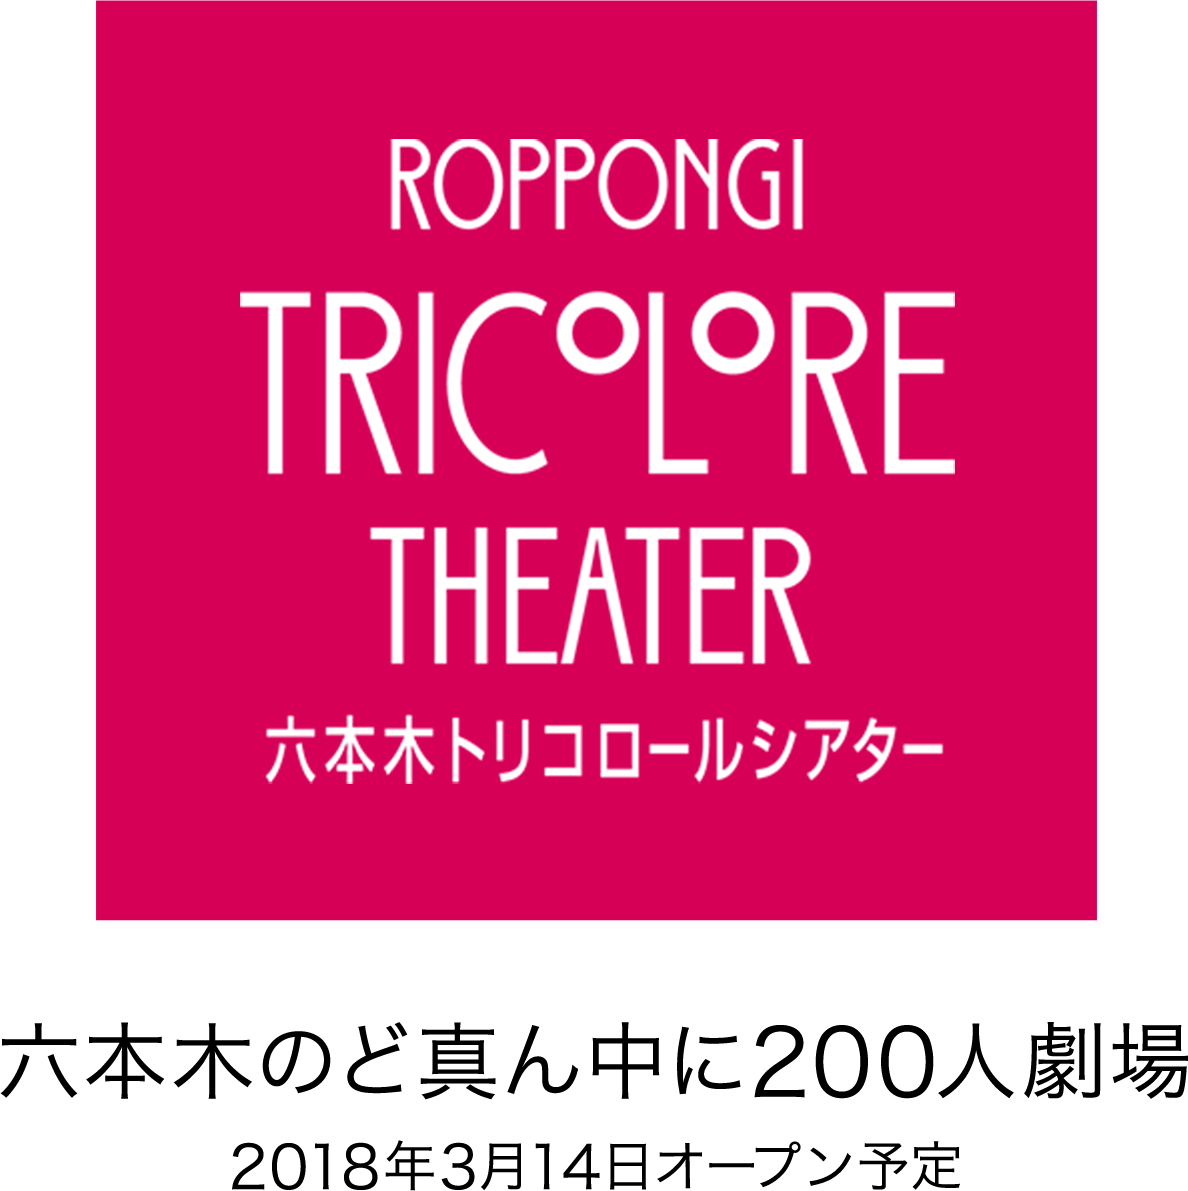 Roppongi Tricolore Theater - 六本木トリコロールシアター